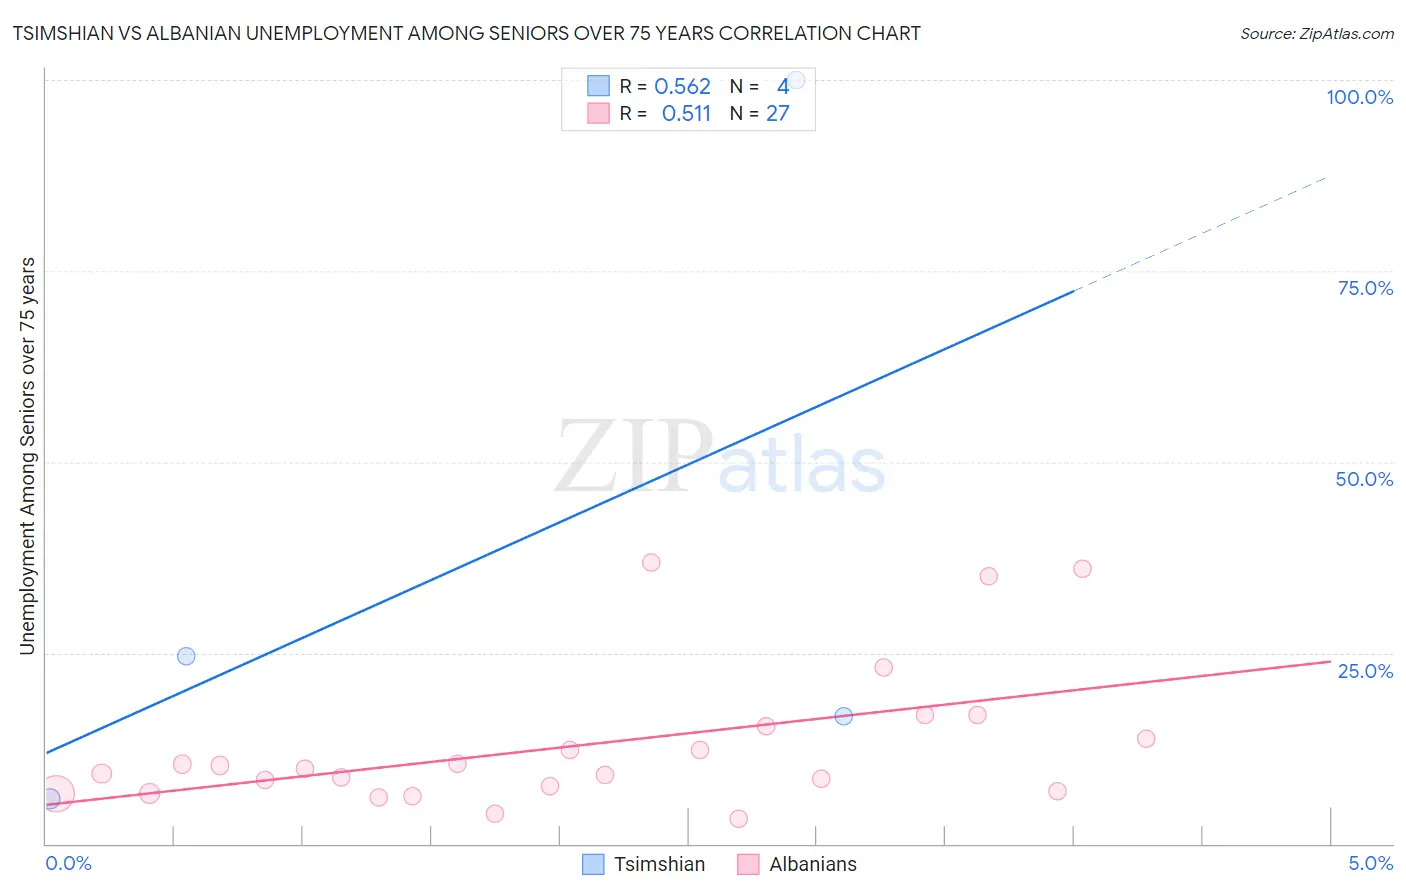 Tsimshian vs Albanian Unemployment Among Seniors over 75 years